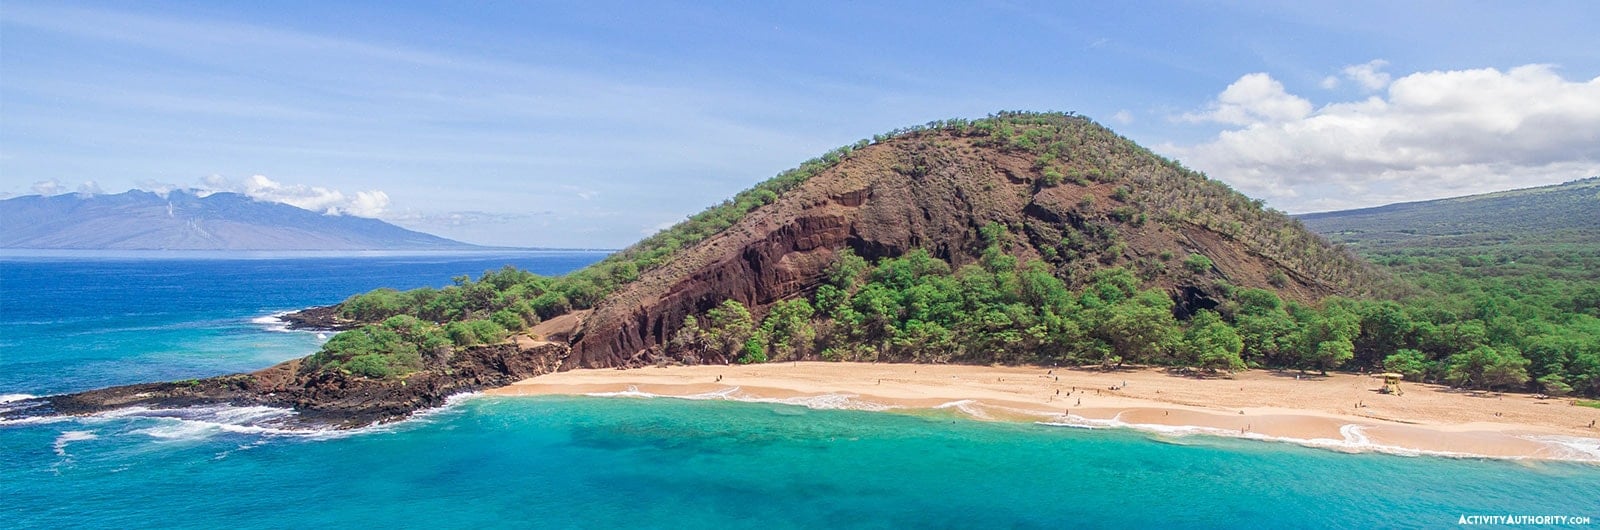 Top 5 Maui Snorkeling Tours